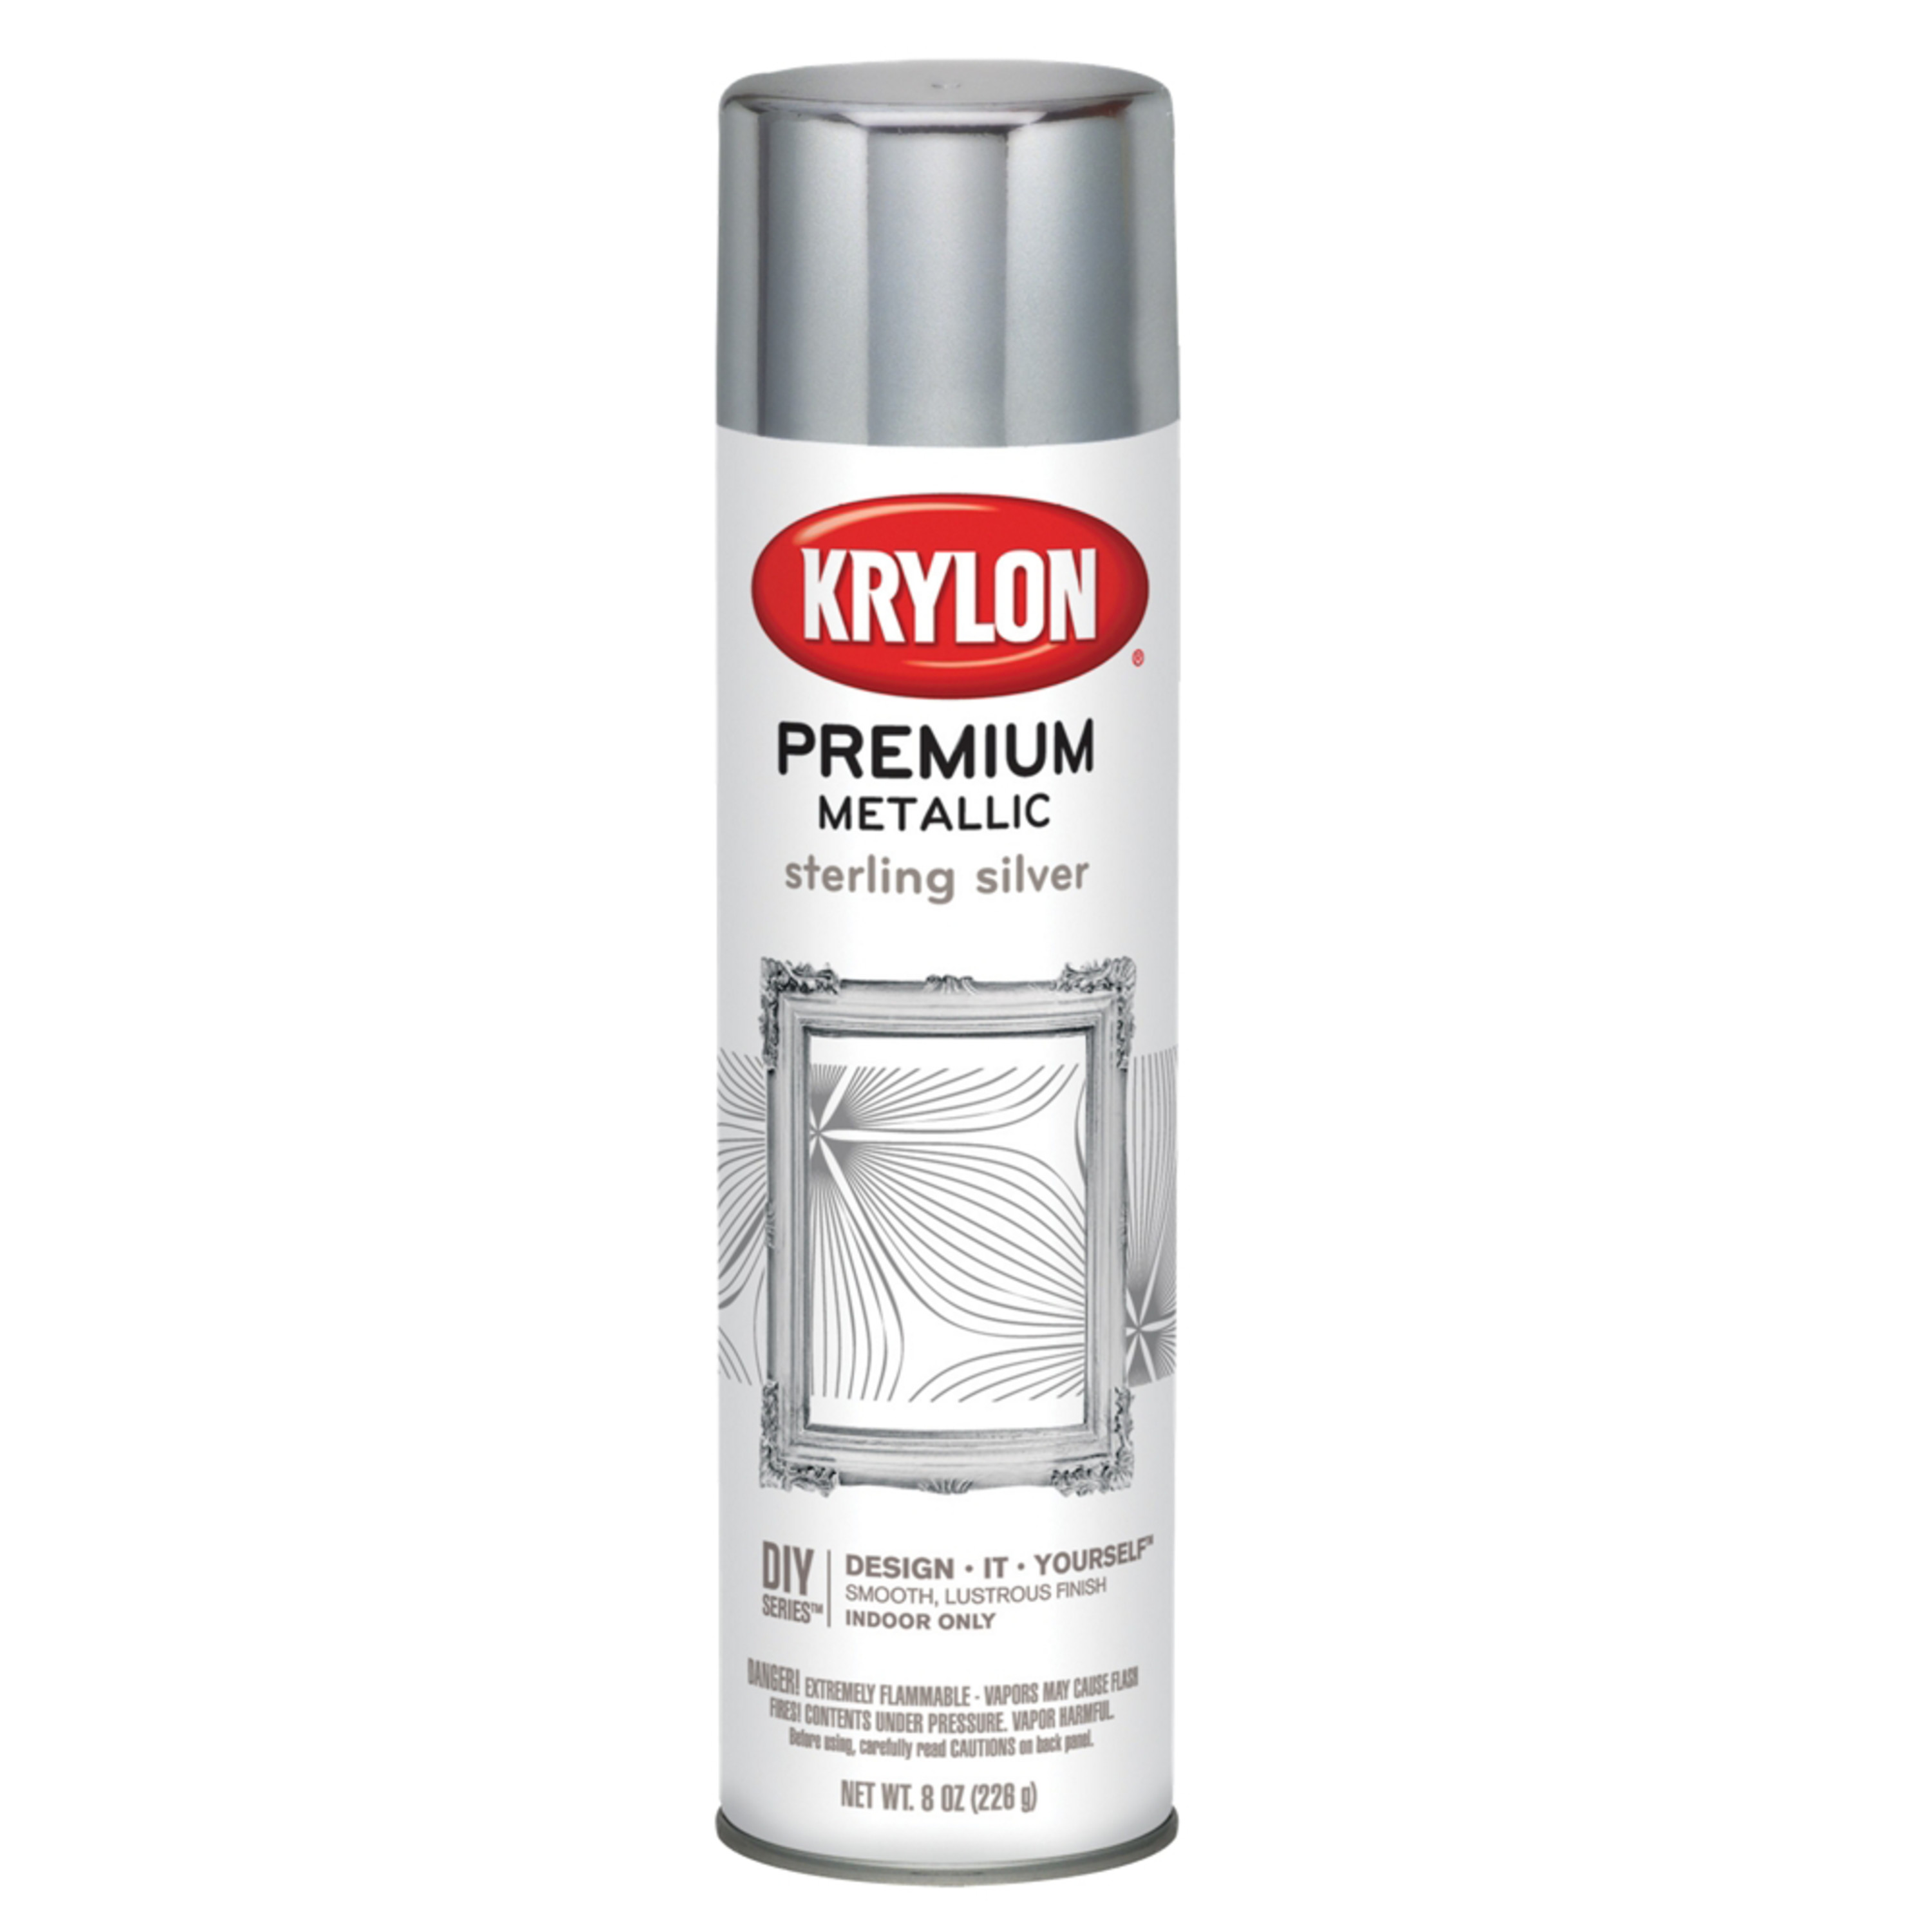 Krylon Premium Metallic Coating Spray Paint, 8 oz., Sterling Silver - image 1 of 3